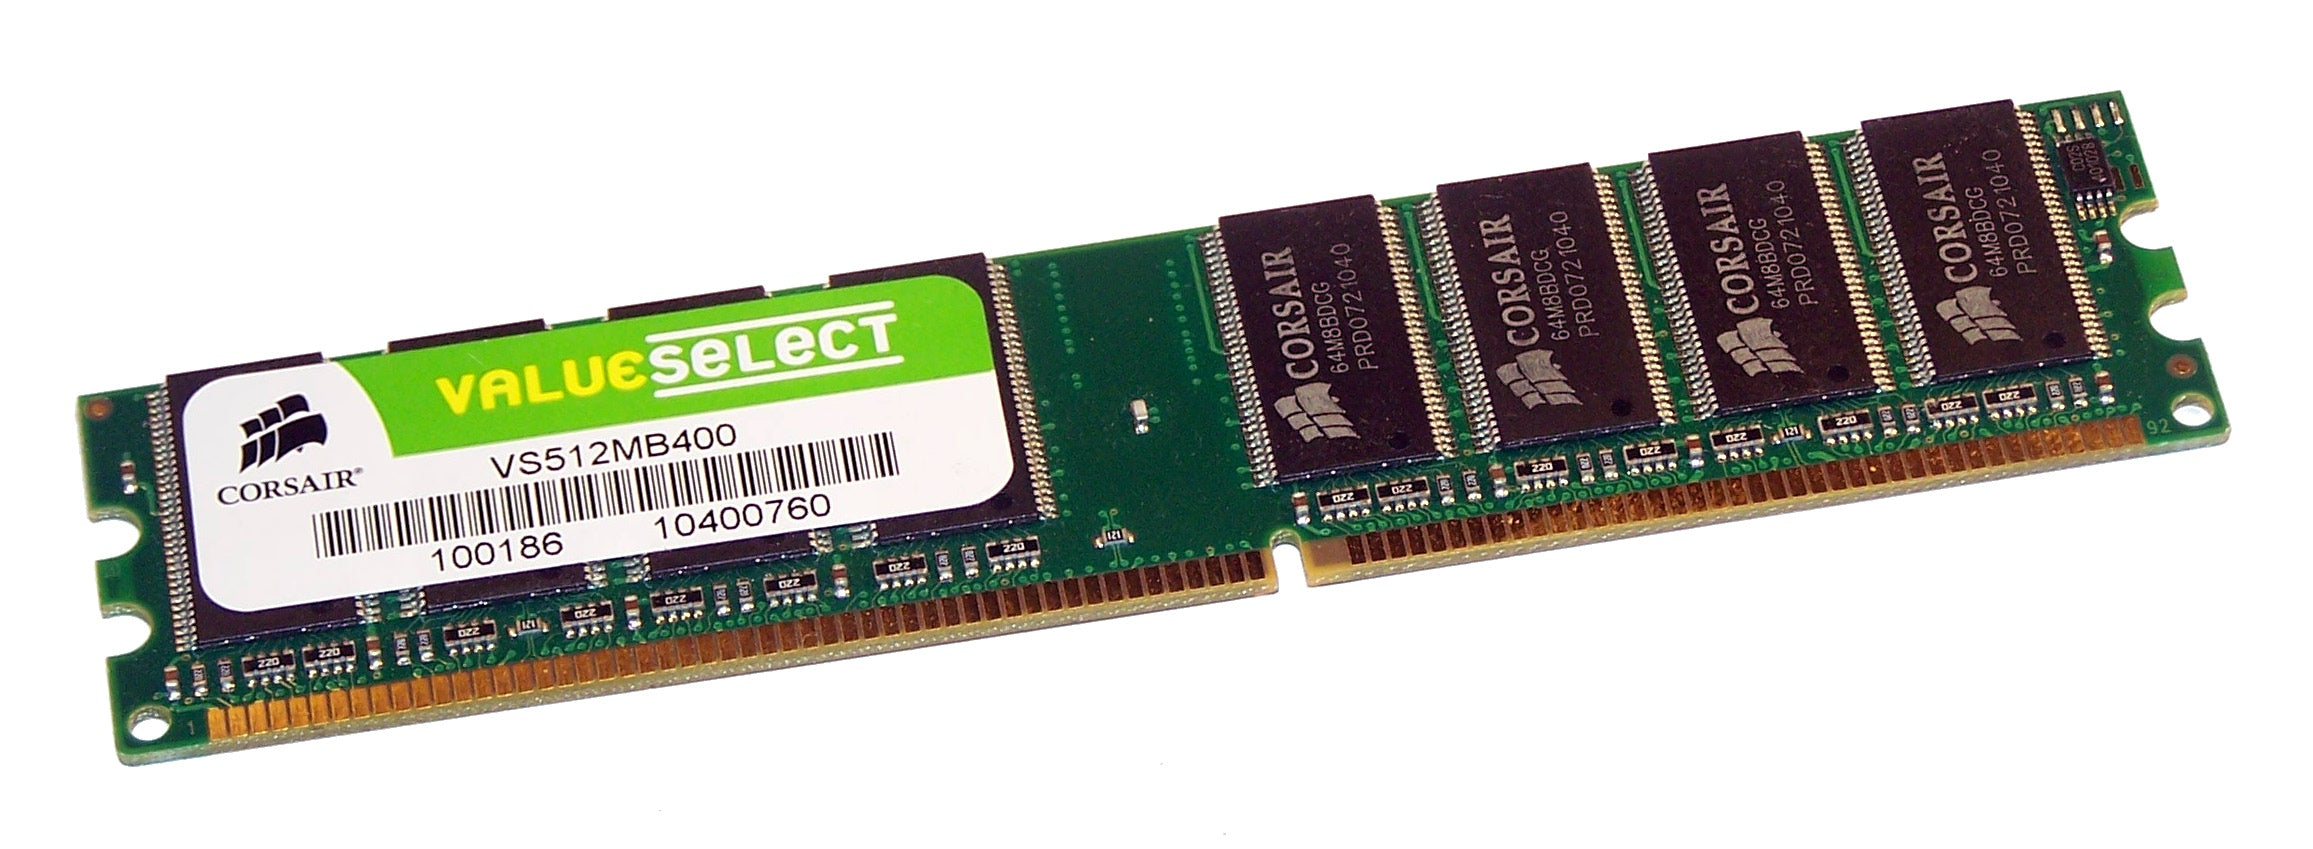 Corsair Value Select 512MB PC3200 DDR-400MHz nonECC CL3 184P DIMM ( VS512MB400 ) REF